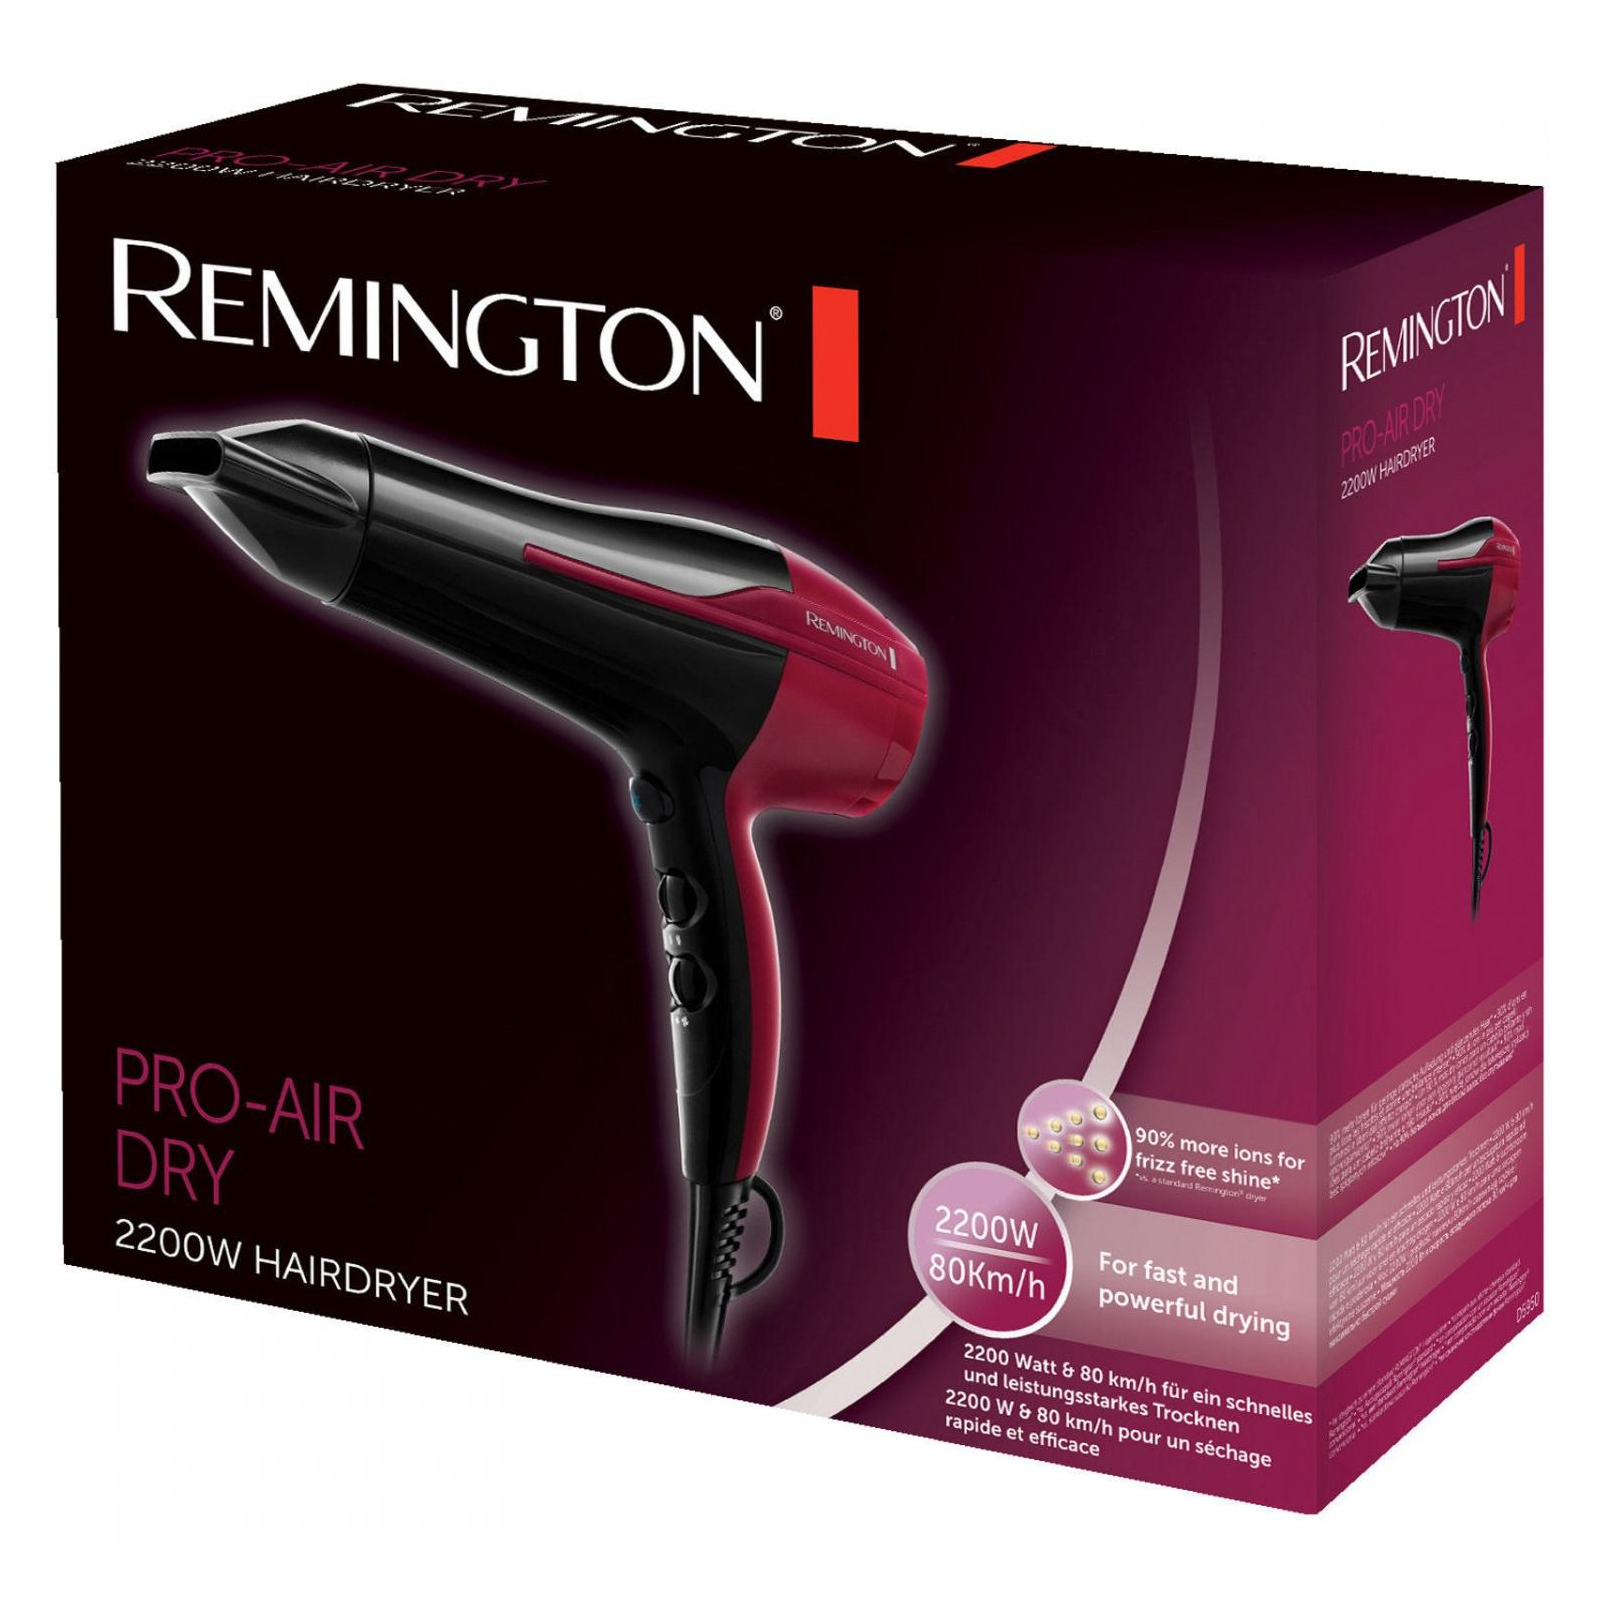 Фен Remington Pro-Air Dry (D5950) изображение 2